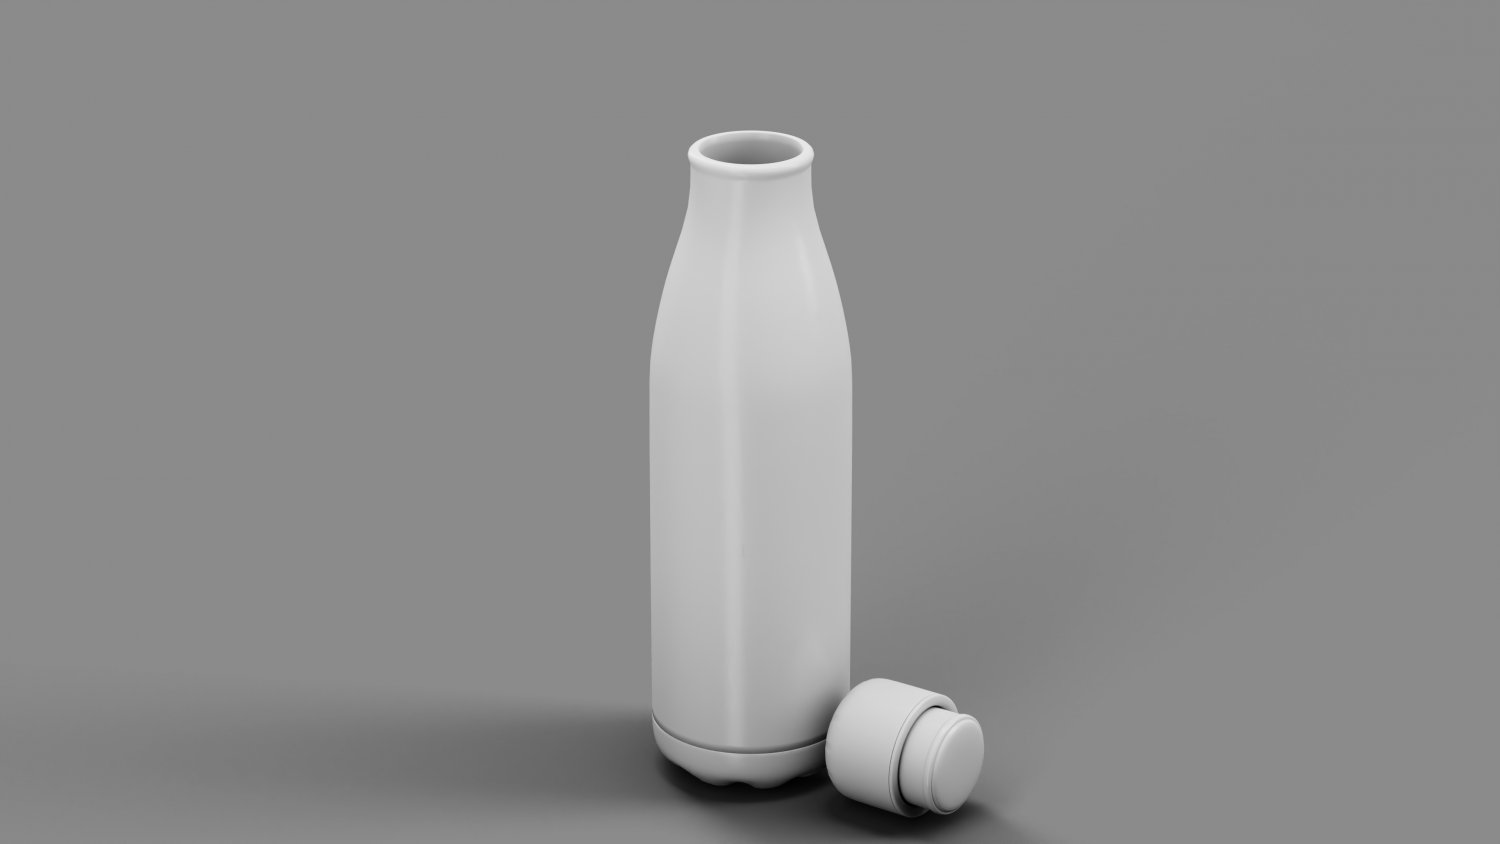 Isostar water bottle 3D model